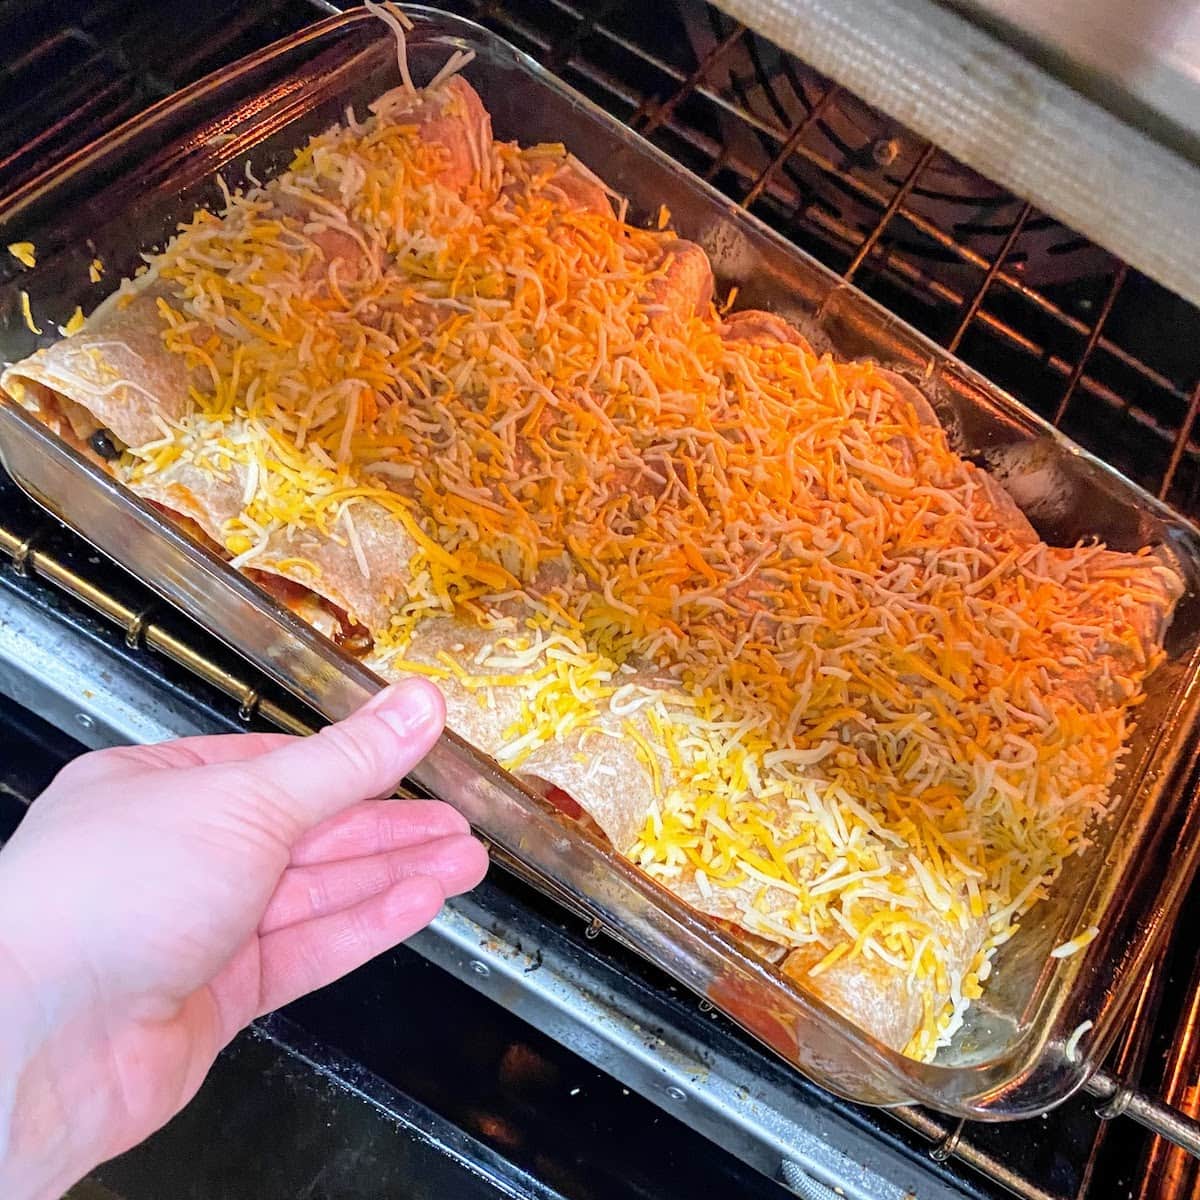 placing enchiladas in oven